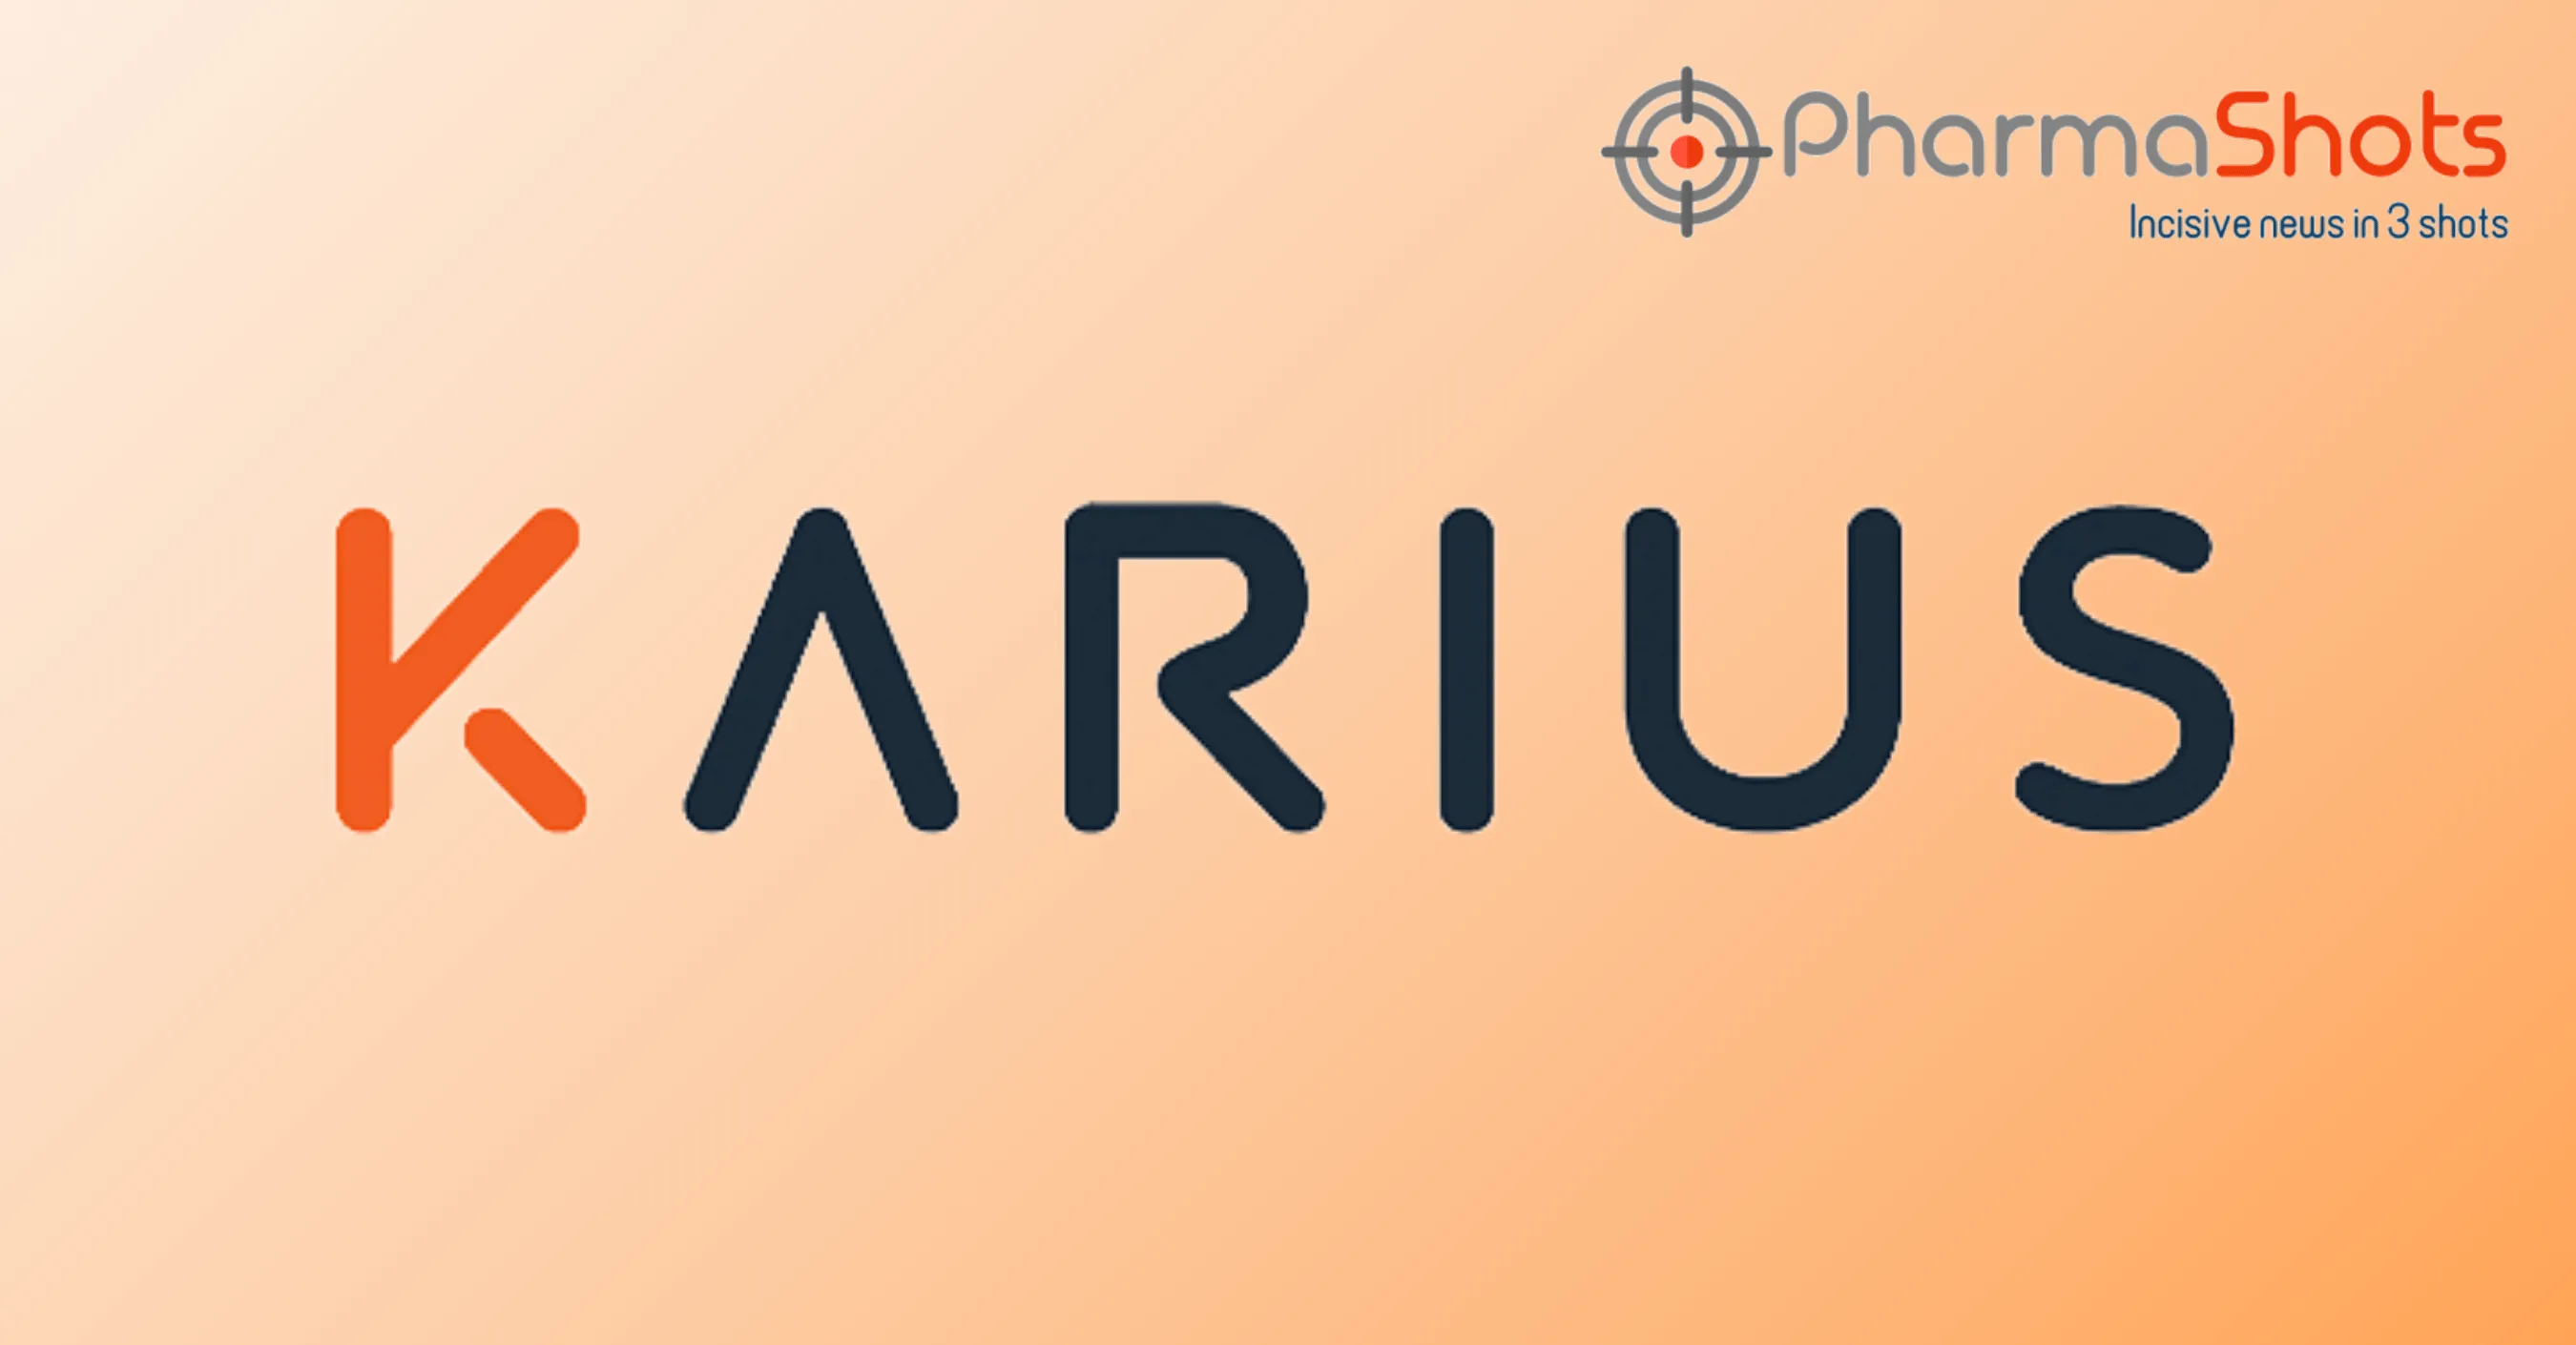 Karius Reports the US FDA’s Breakthrough Device Designation for its Karius Test to Diagnose Infectious Disease